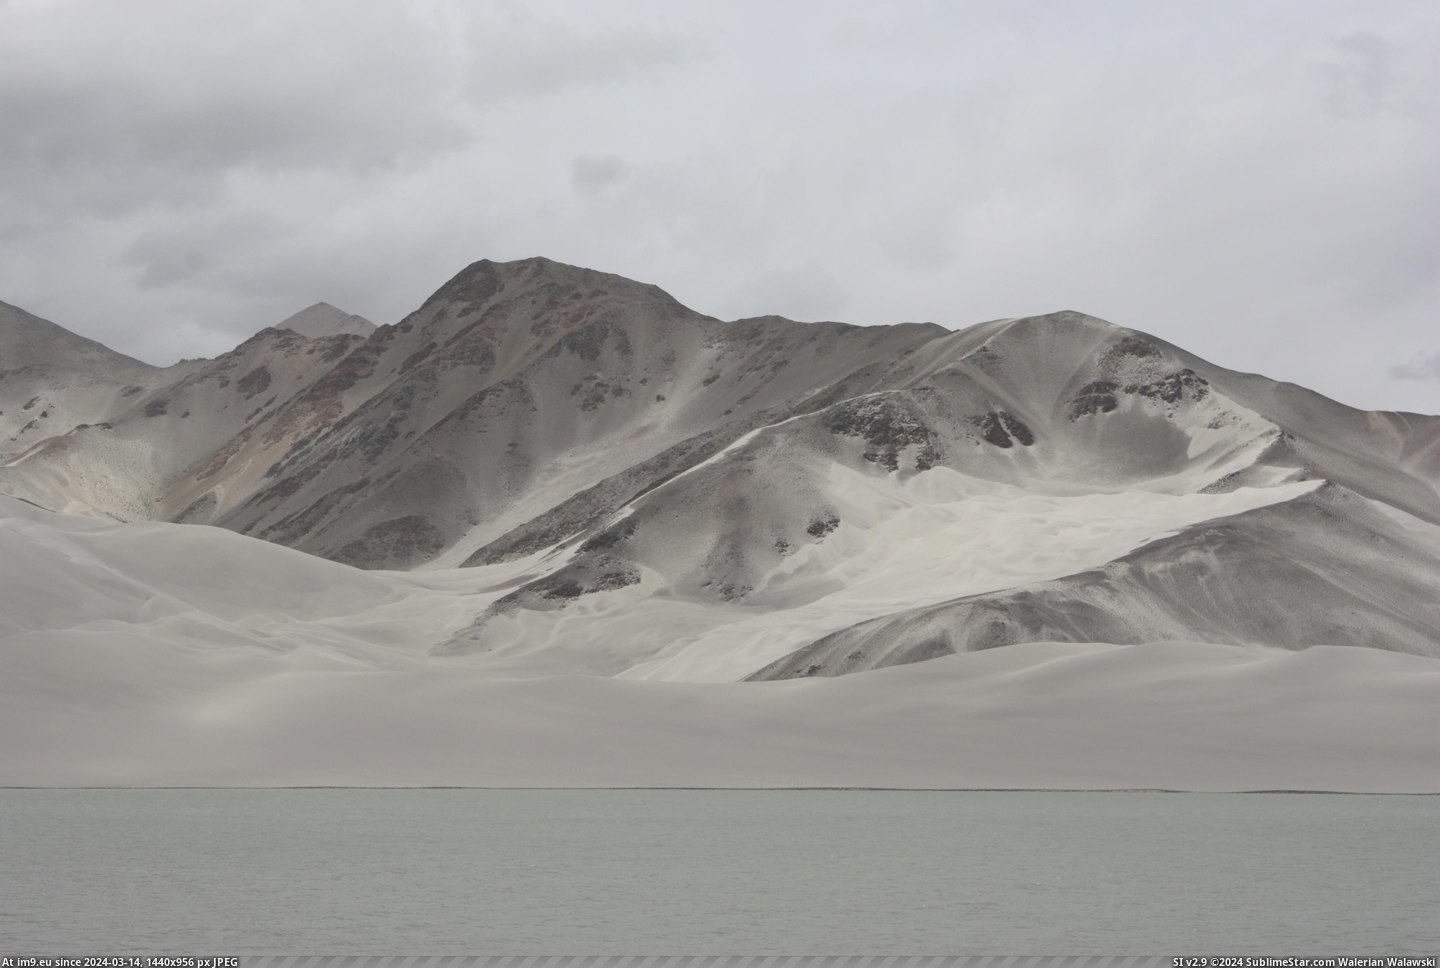 #White #Mountain #Province #4272x2848 #Xinjiang #China #Sand [Earthporn] [OC] White Sand mountain - Xinjiang Province, China [4272x2848] Pic. (Bild von album My r/EARTHPORN favs))